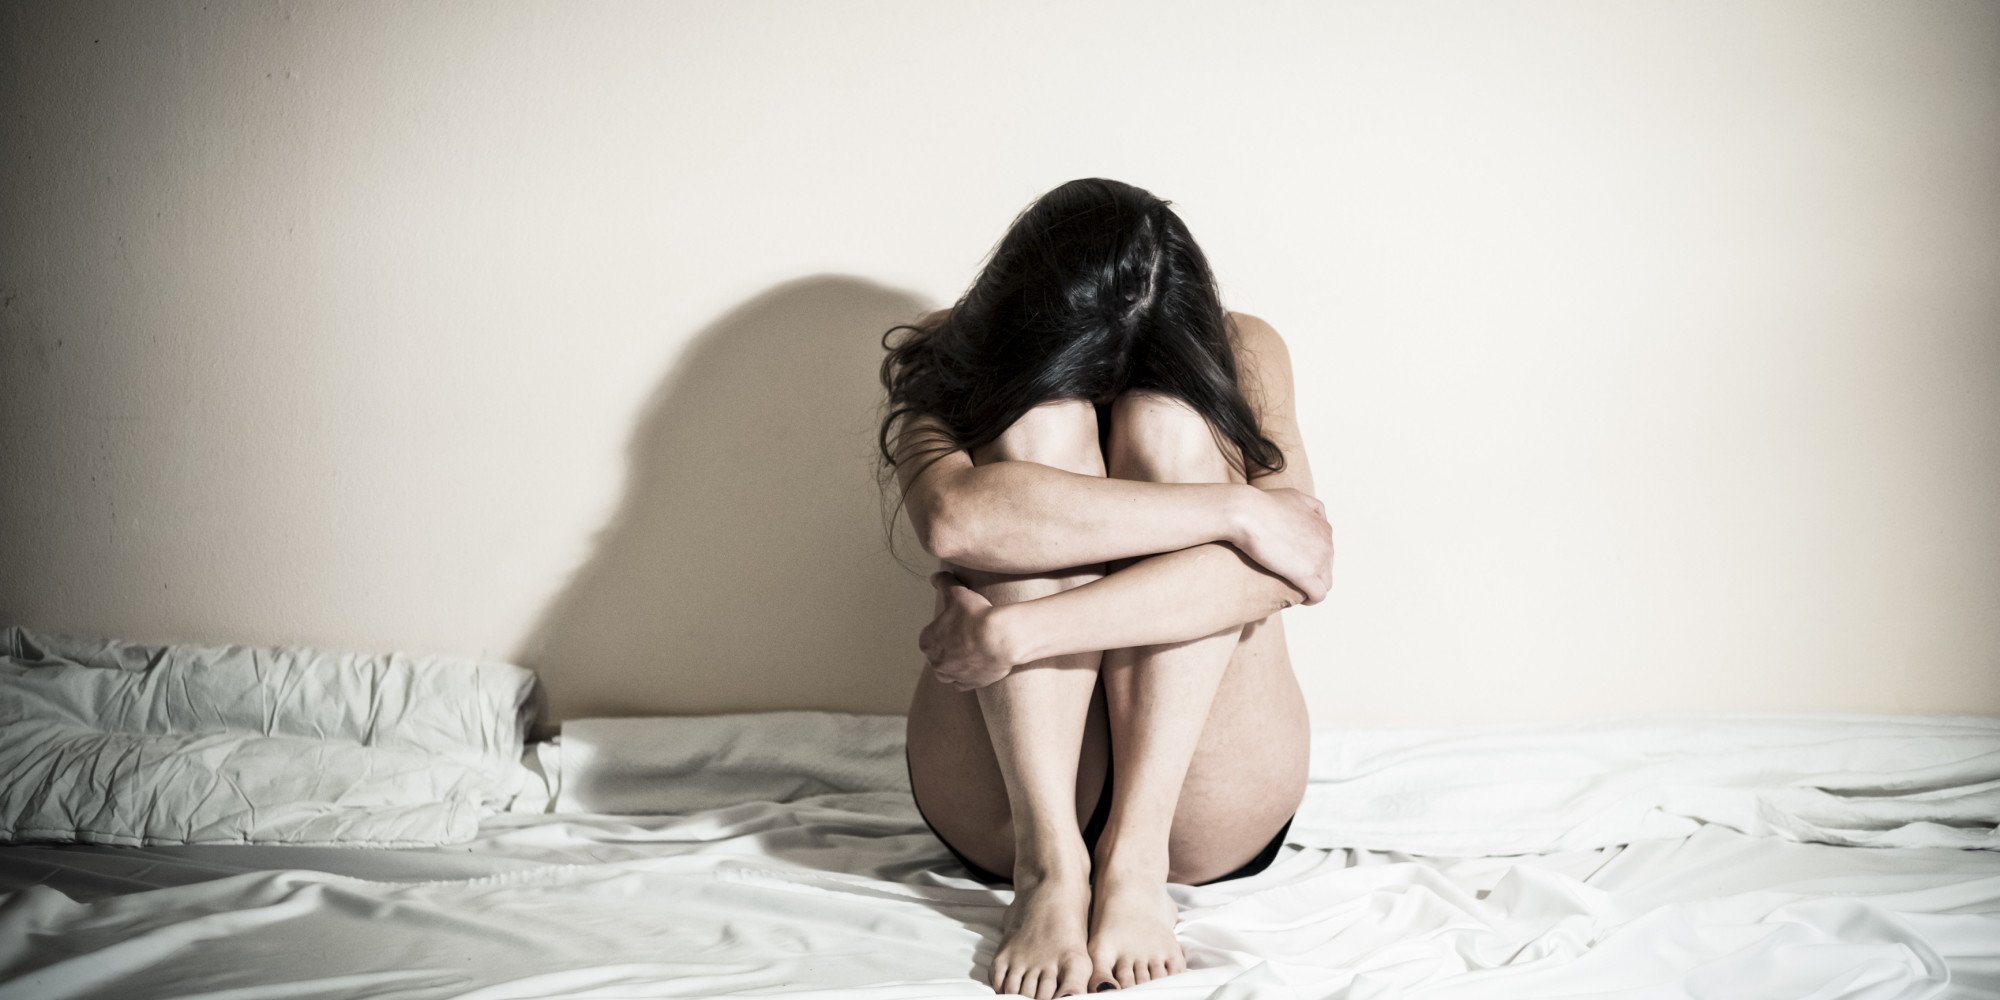 १६ वर्षकी एउटी किशोरीमाथि ४ सय जनाले बलात्कार, २ महिनाकी गर्भवती छिन् पीडित